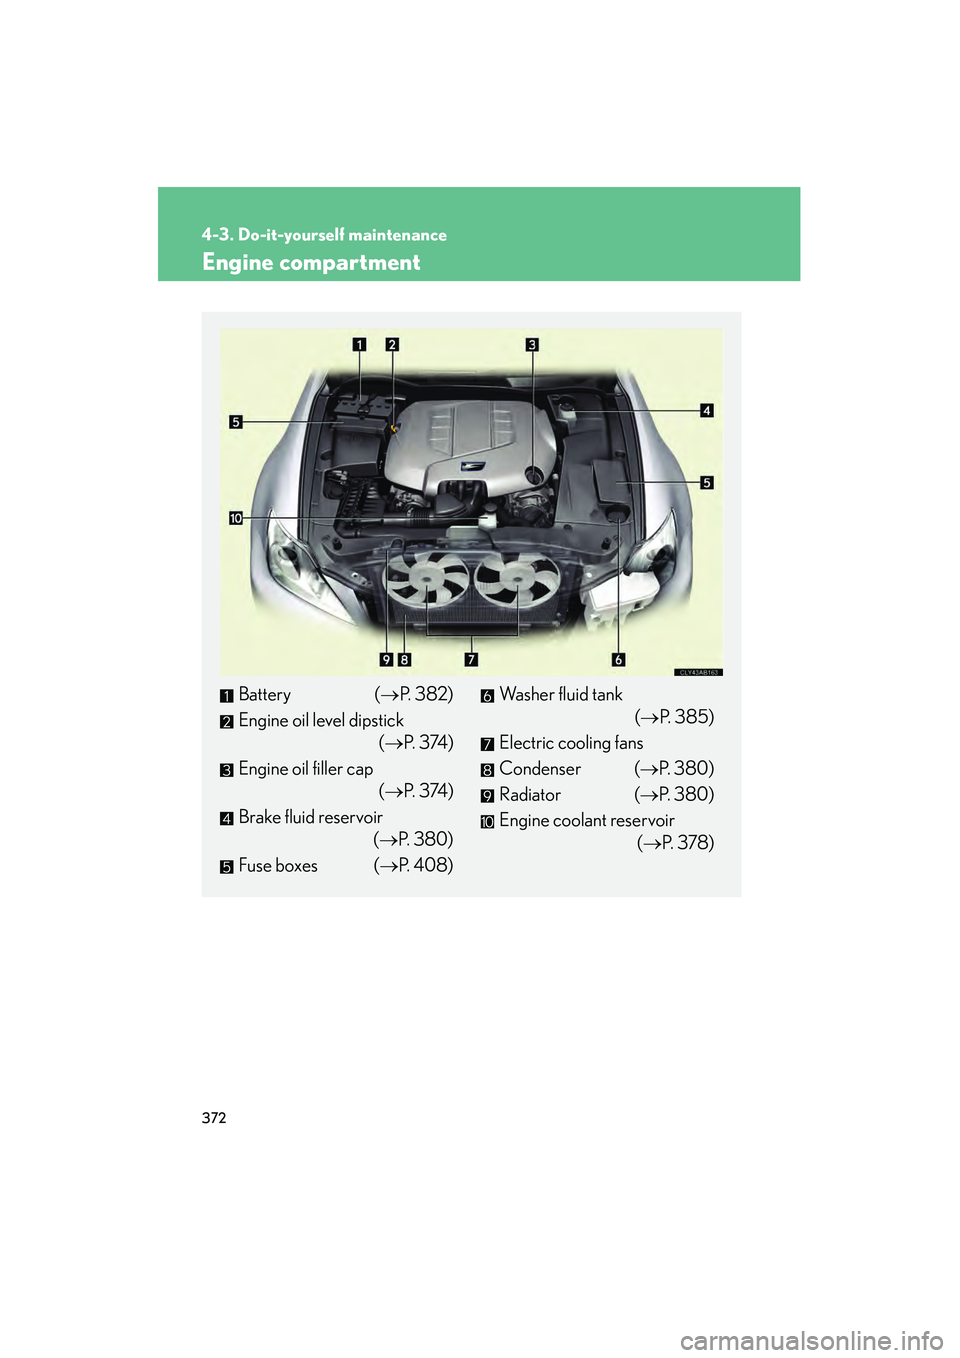 Lexus IS F 2010  Owners Manual 372
4-3. Do-it-yourself maintenance
10_IS F_U
Engine compartment
Battery (→P. 382)
Engine oil level dipstick (→P.  3 74 )
Engine oil filler cap (→P.  3 74 )
Brake fluid reservoir (→P. 380)
Fus